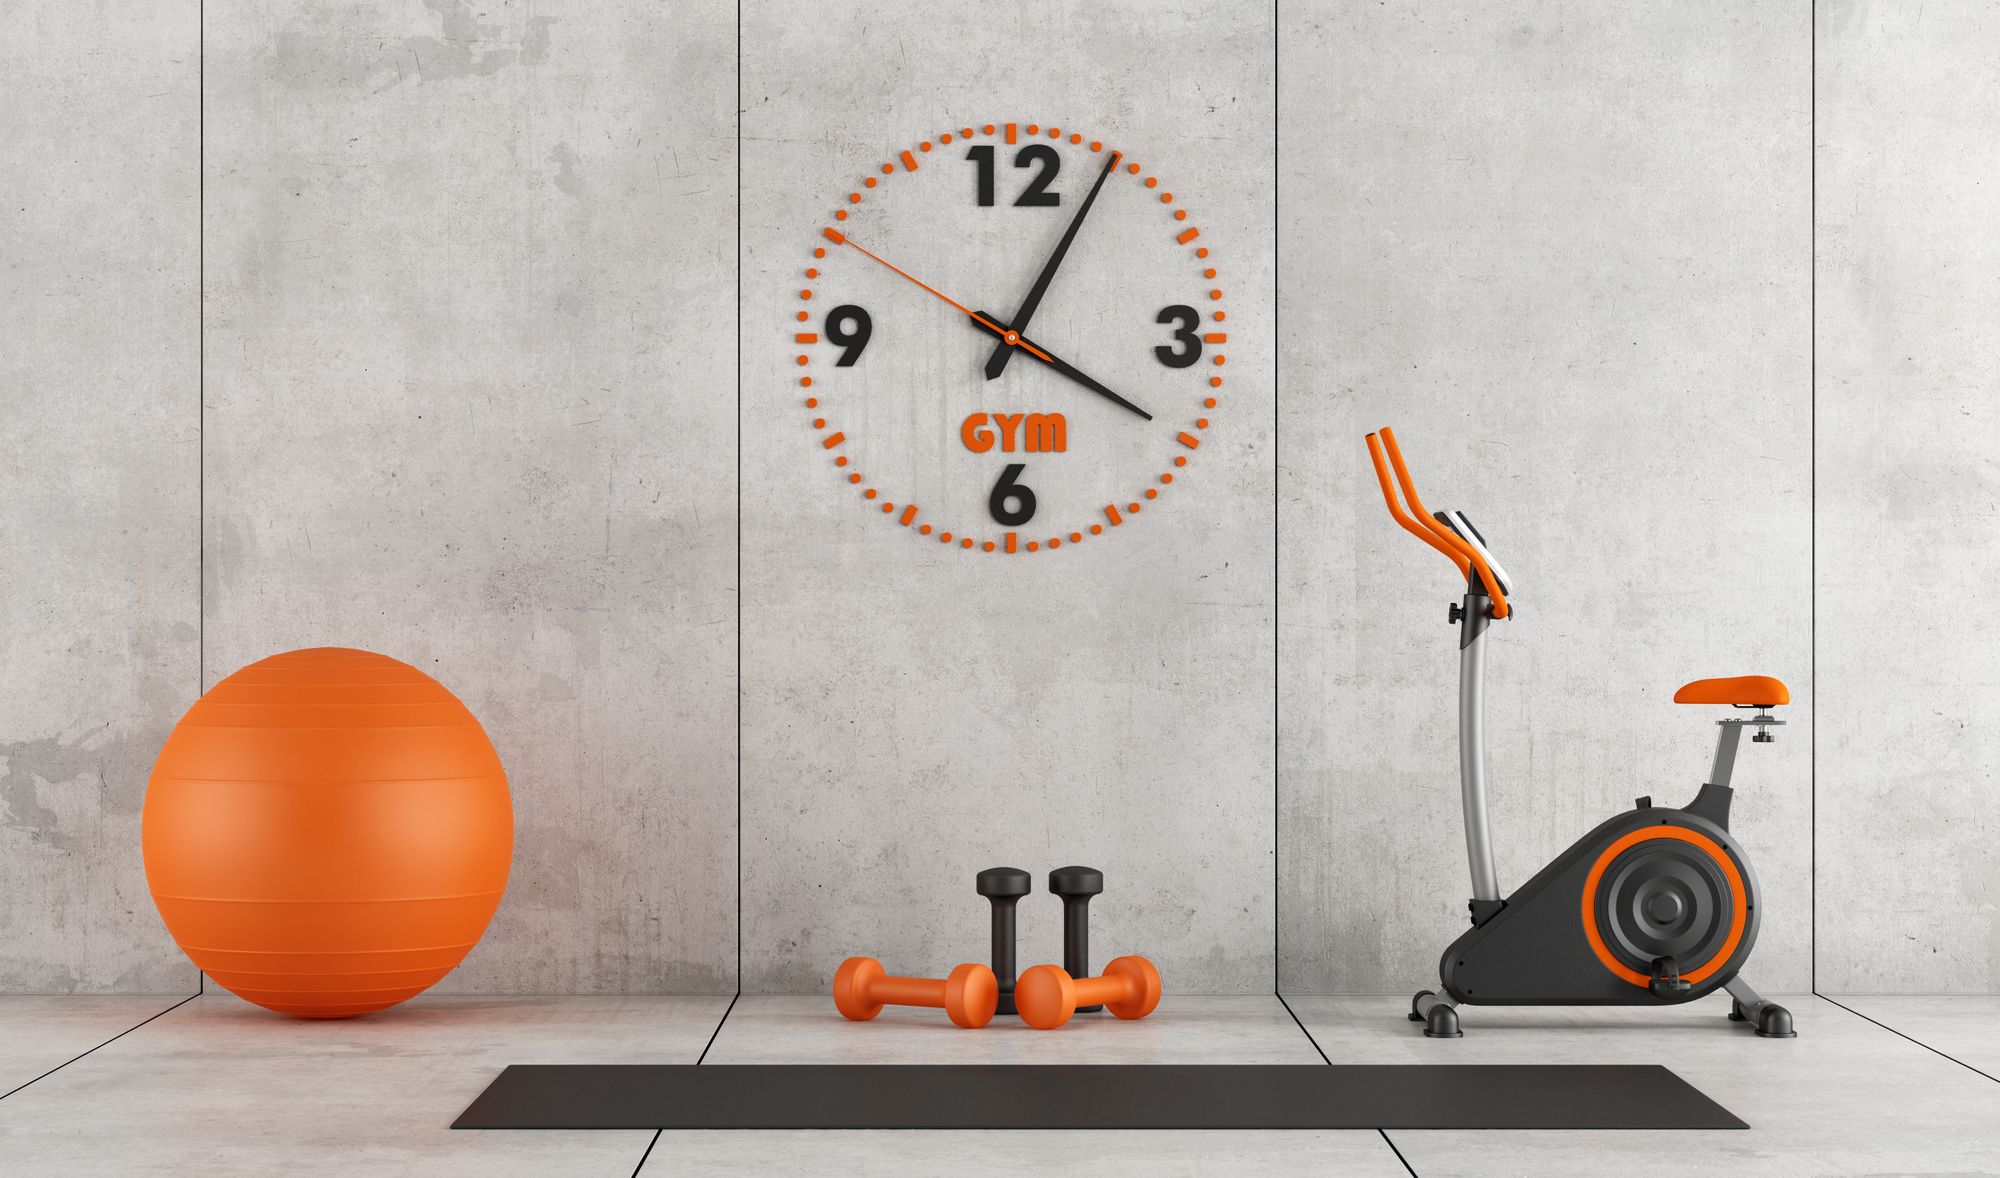 Concrete room with orange coloured gym equipment